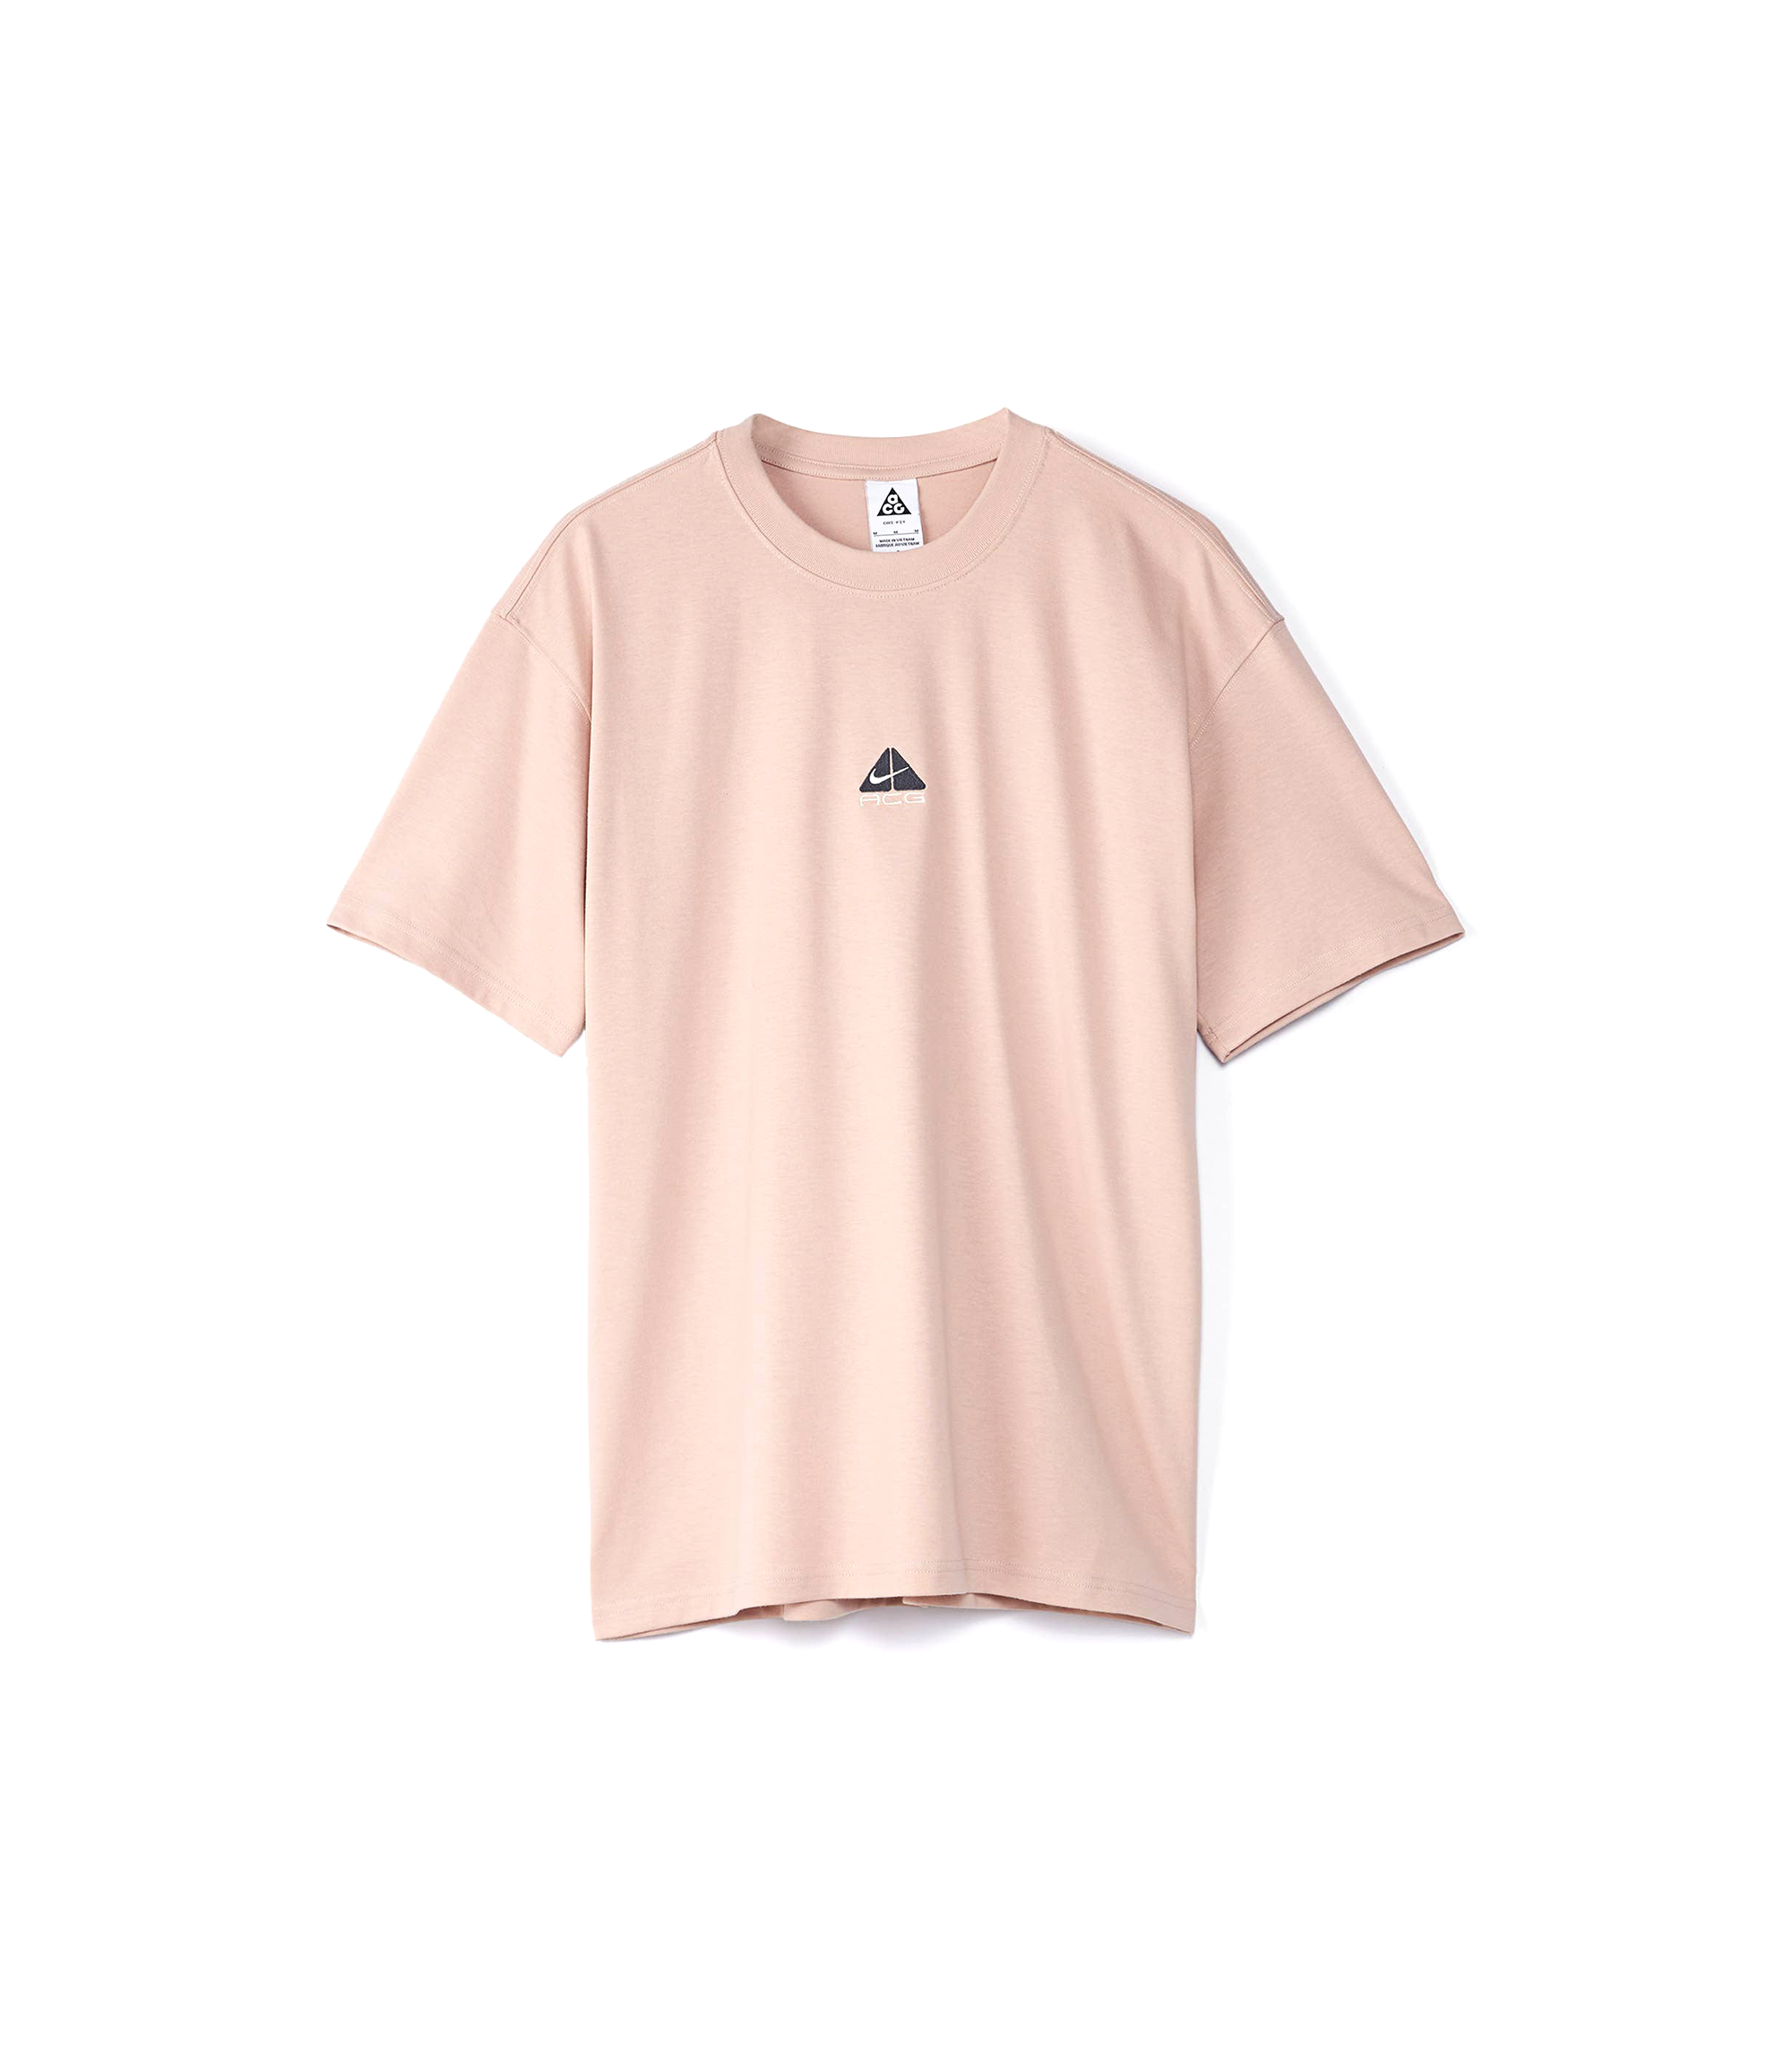 Lung T-shirt - Pink Oxford